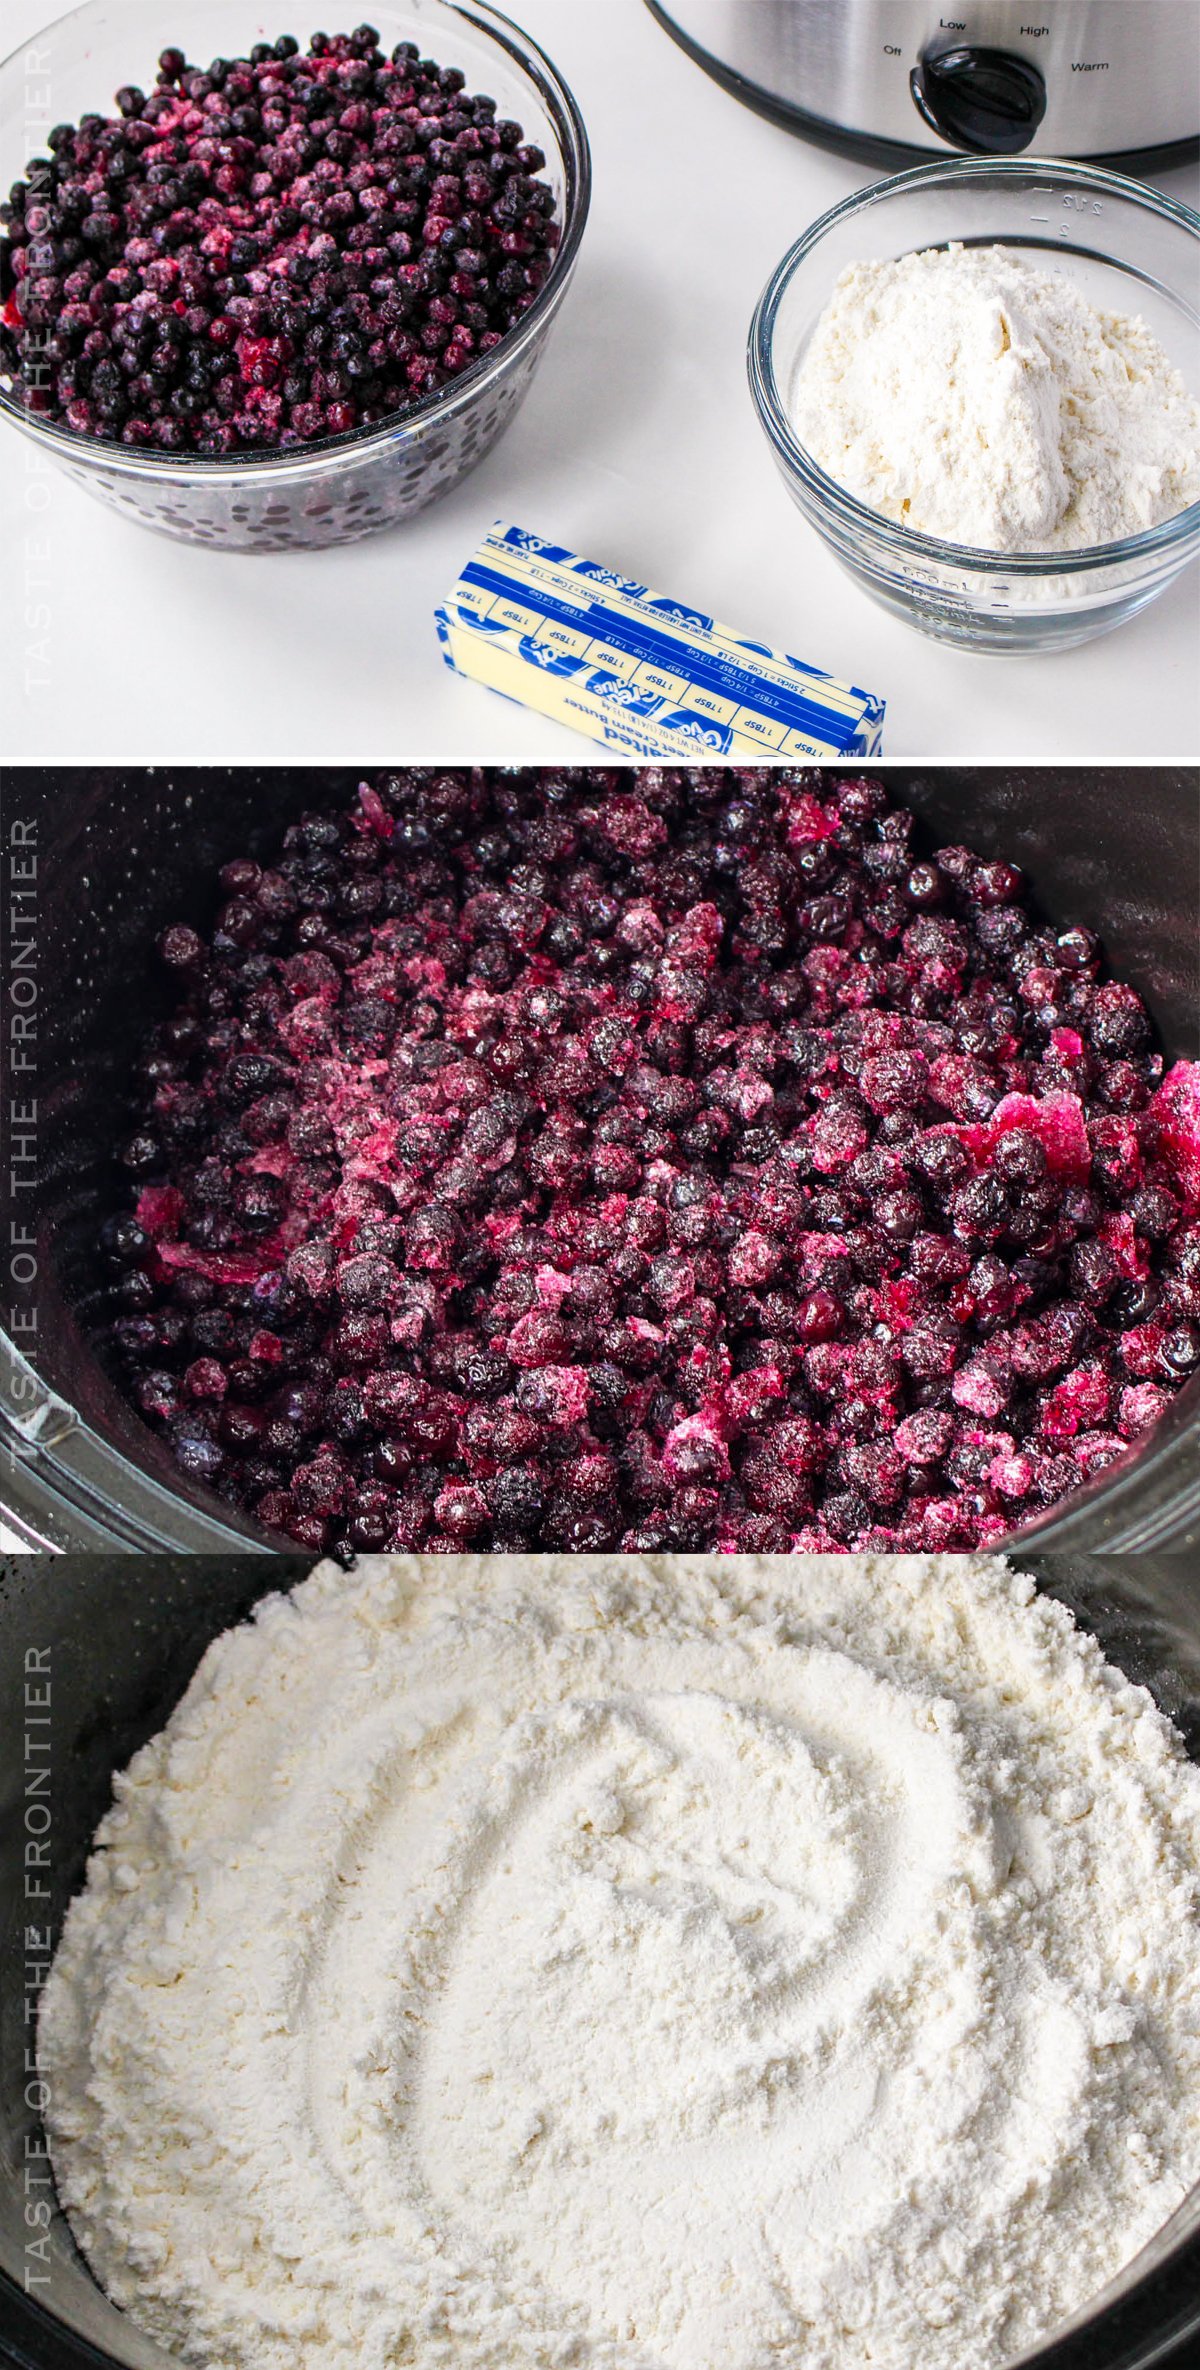 Ingredients for Slow Cooker Blueberry Cobbler